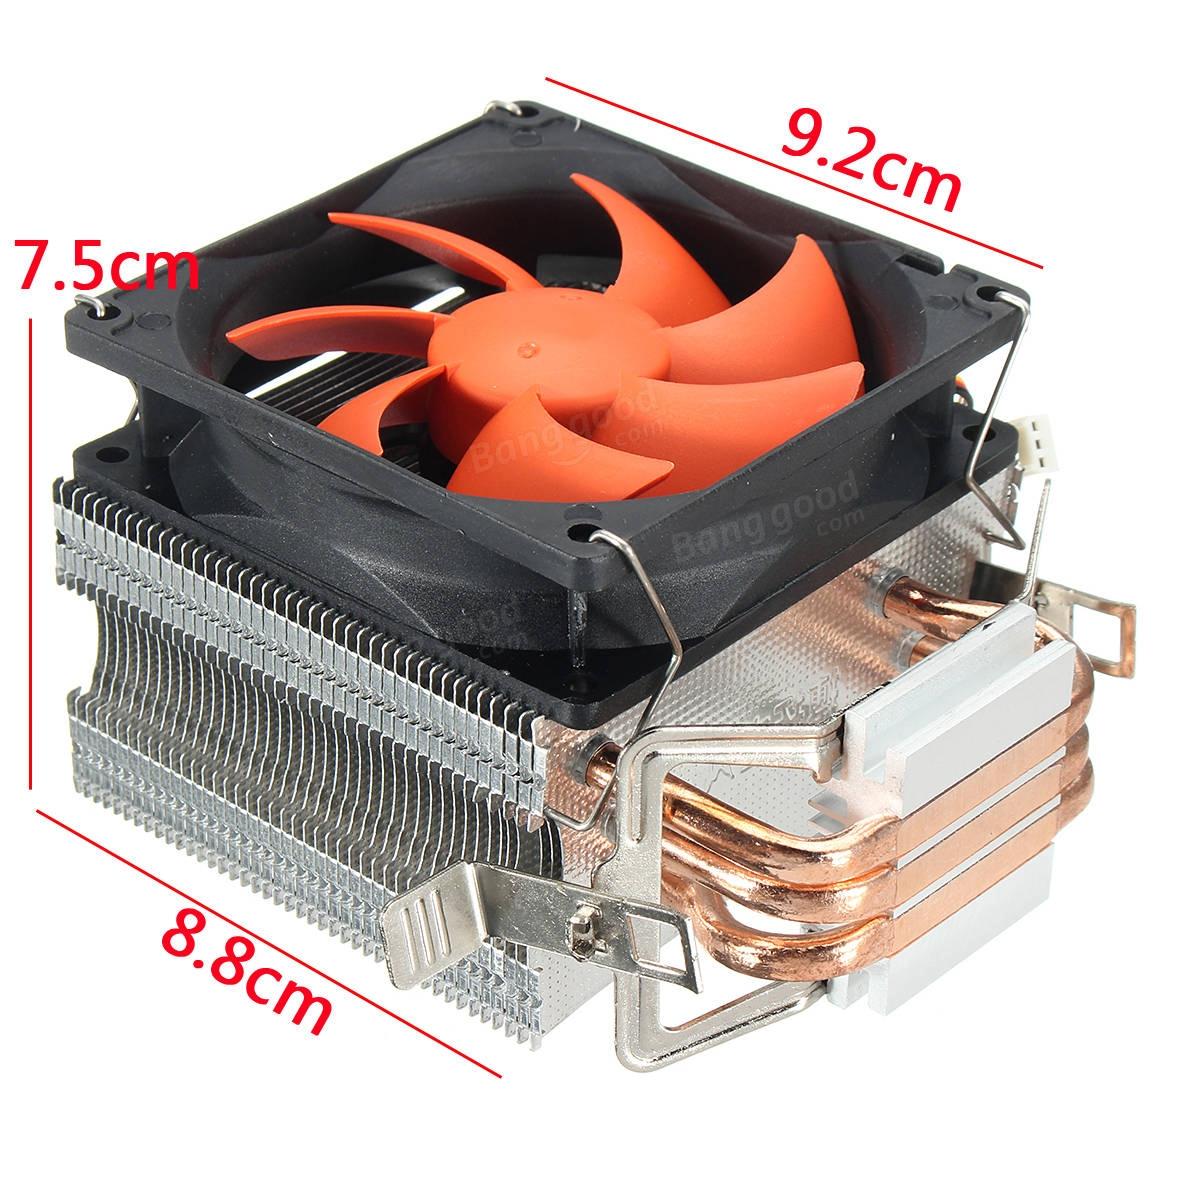 Кулер центр. Кулер для процессора Deepcool 775. Thermaltake 1155 Cooler. Thermaltake кулер 775. Вентилятор ЦПУ CPU Cooler (jonsbo tw4-240 водяное охлаждение).